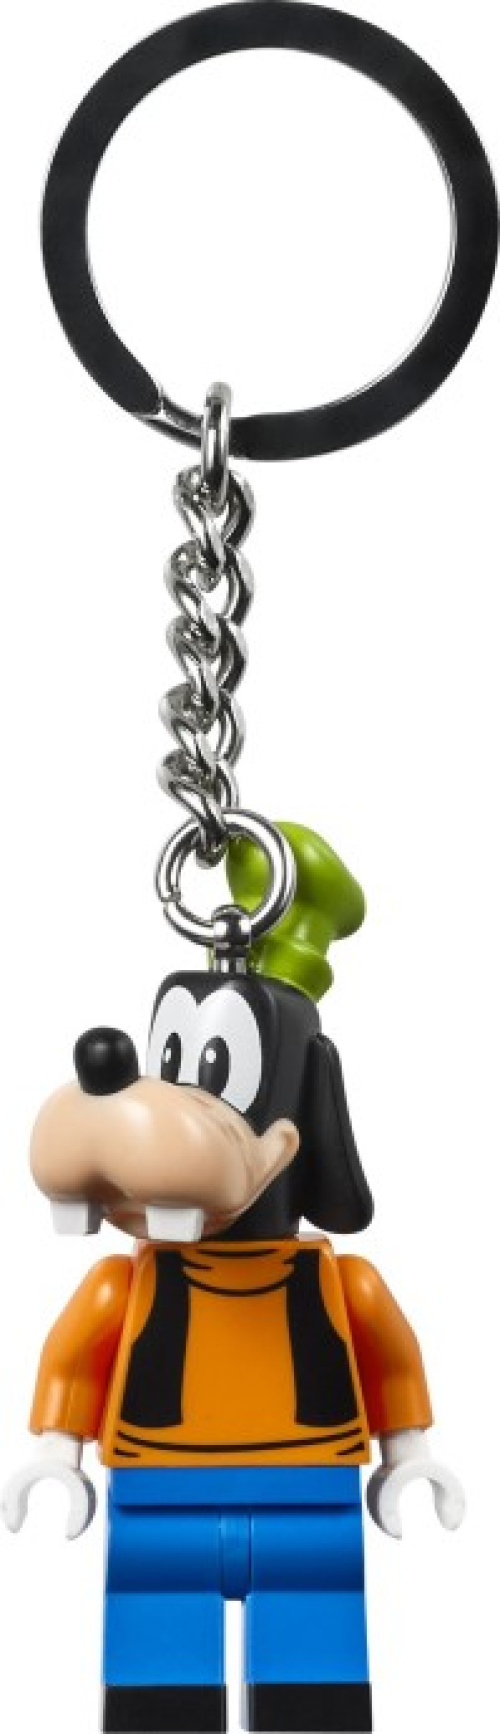 854196-1 Goofy Key Chain